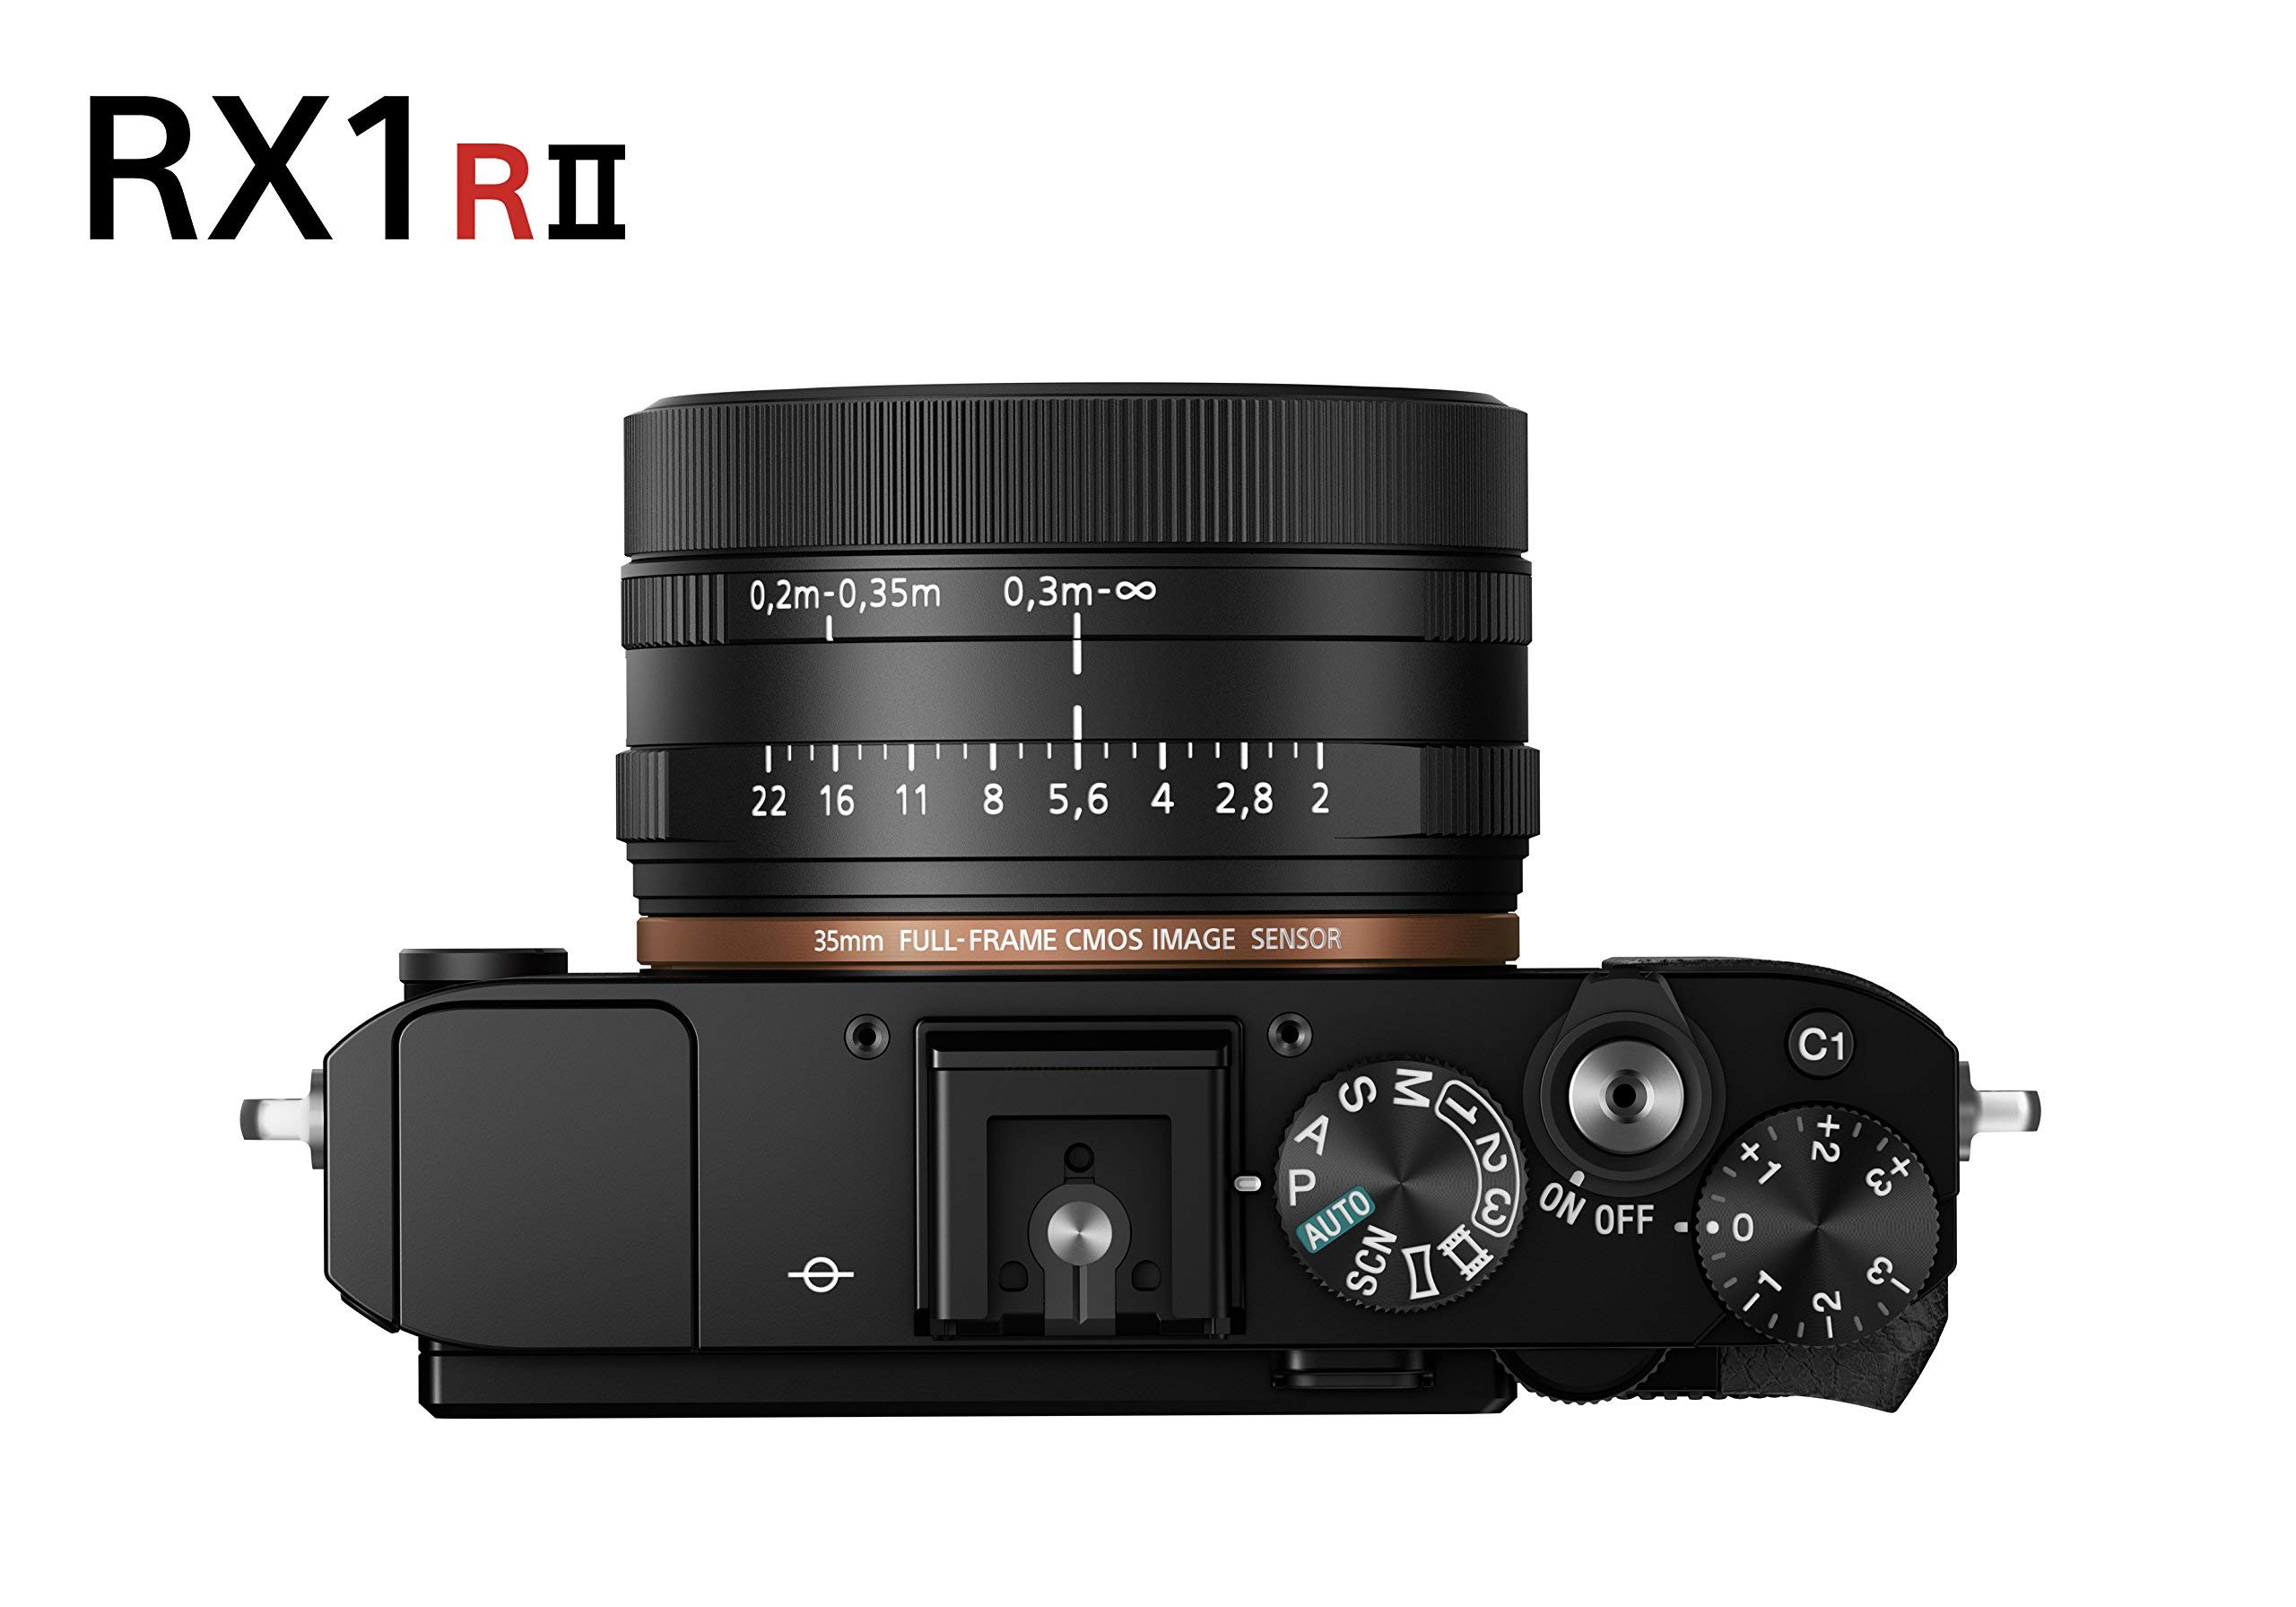 Sony Cyber-shot DSC-RX1 RII Digital Still Camera (Renewed)